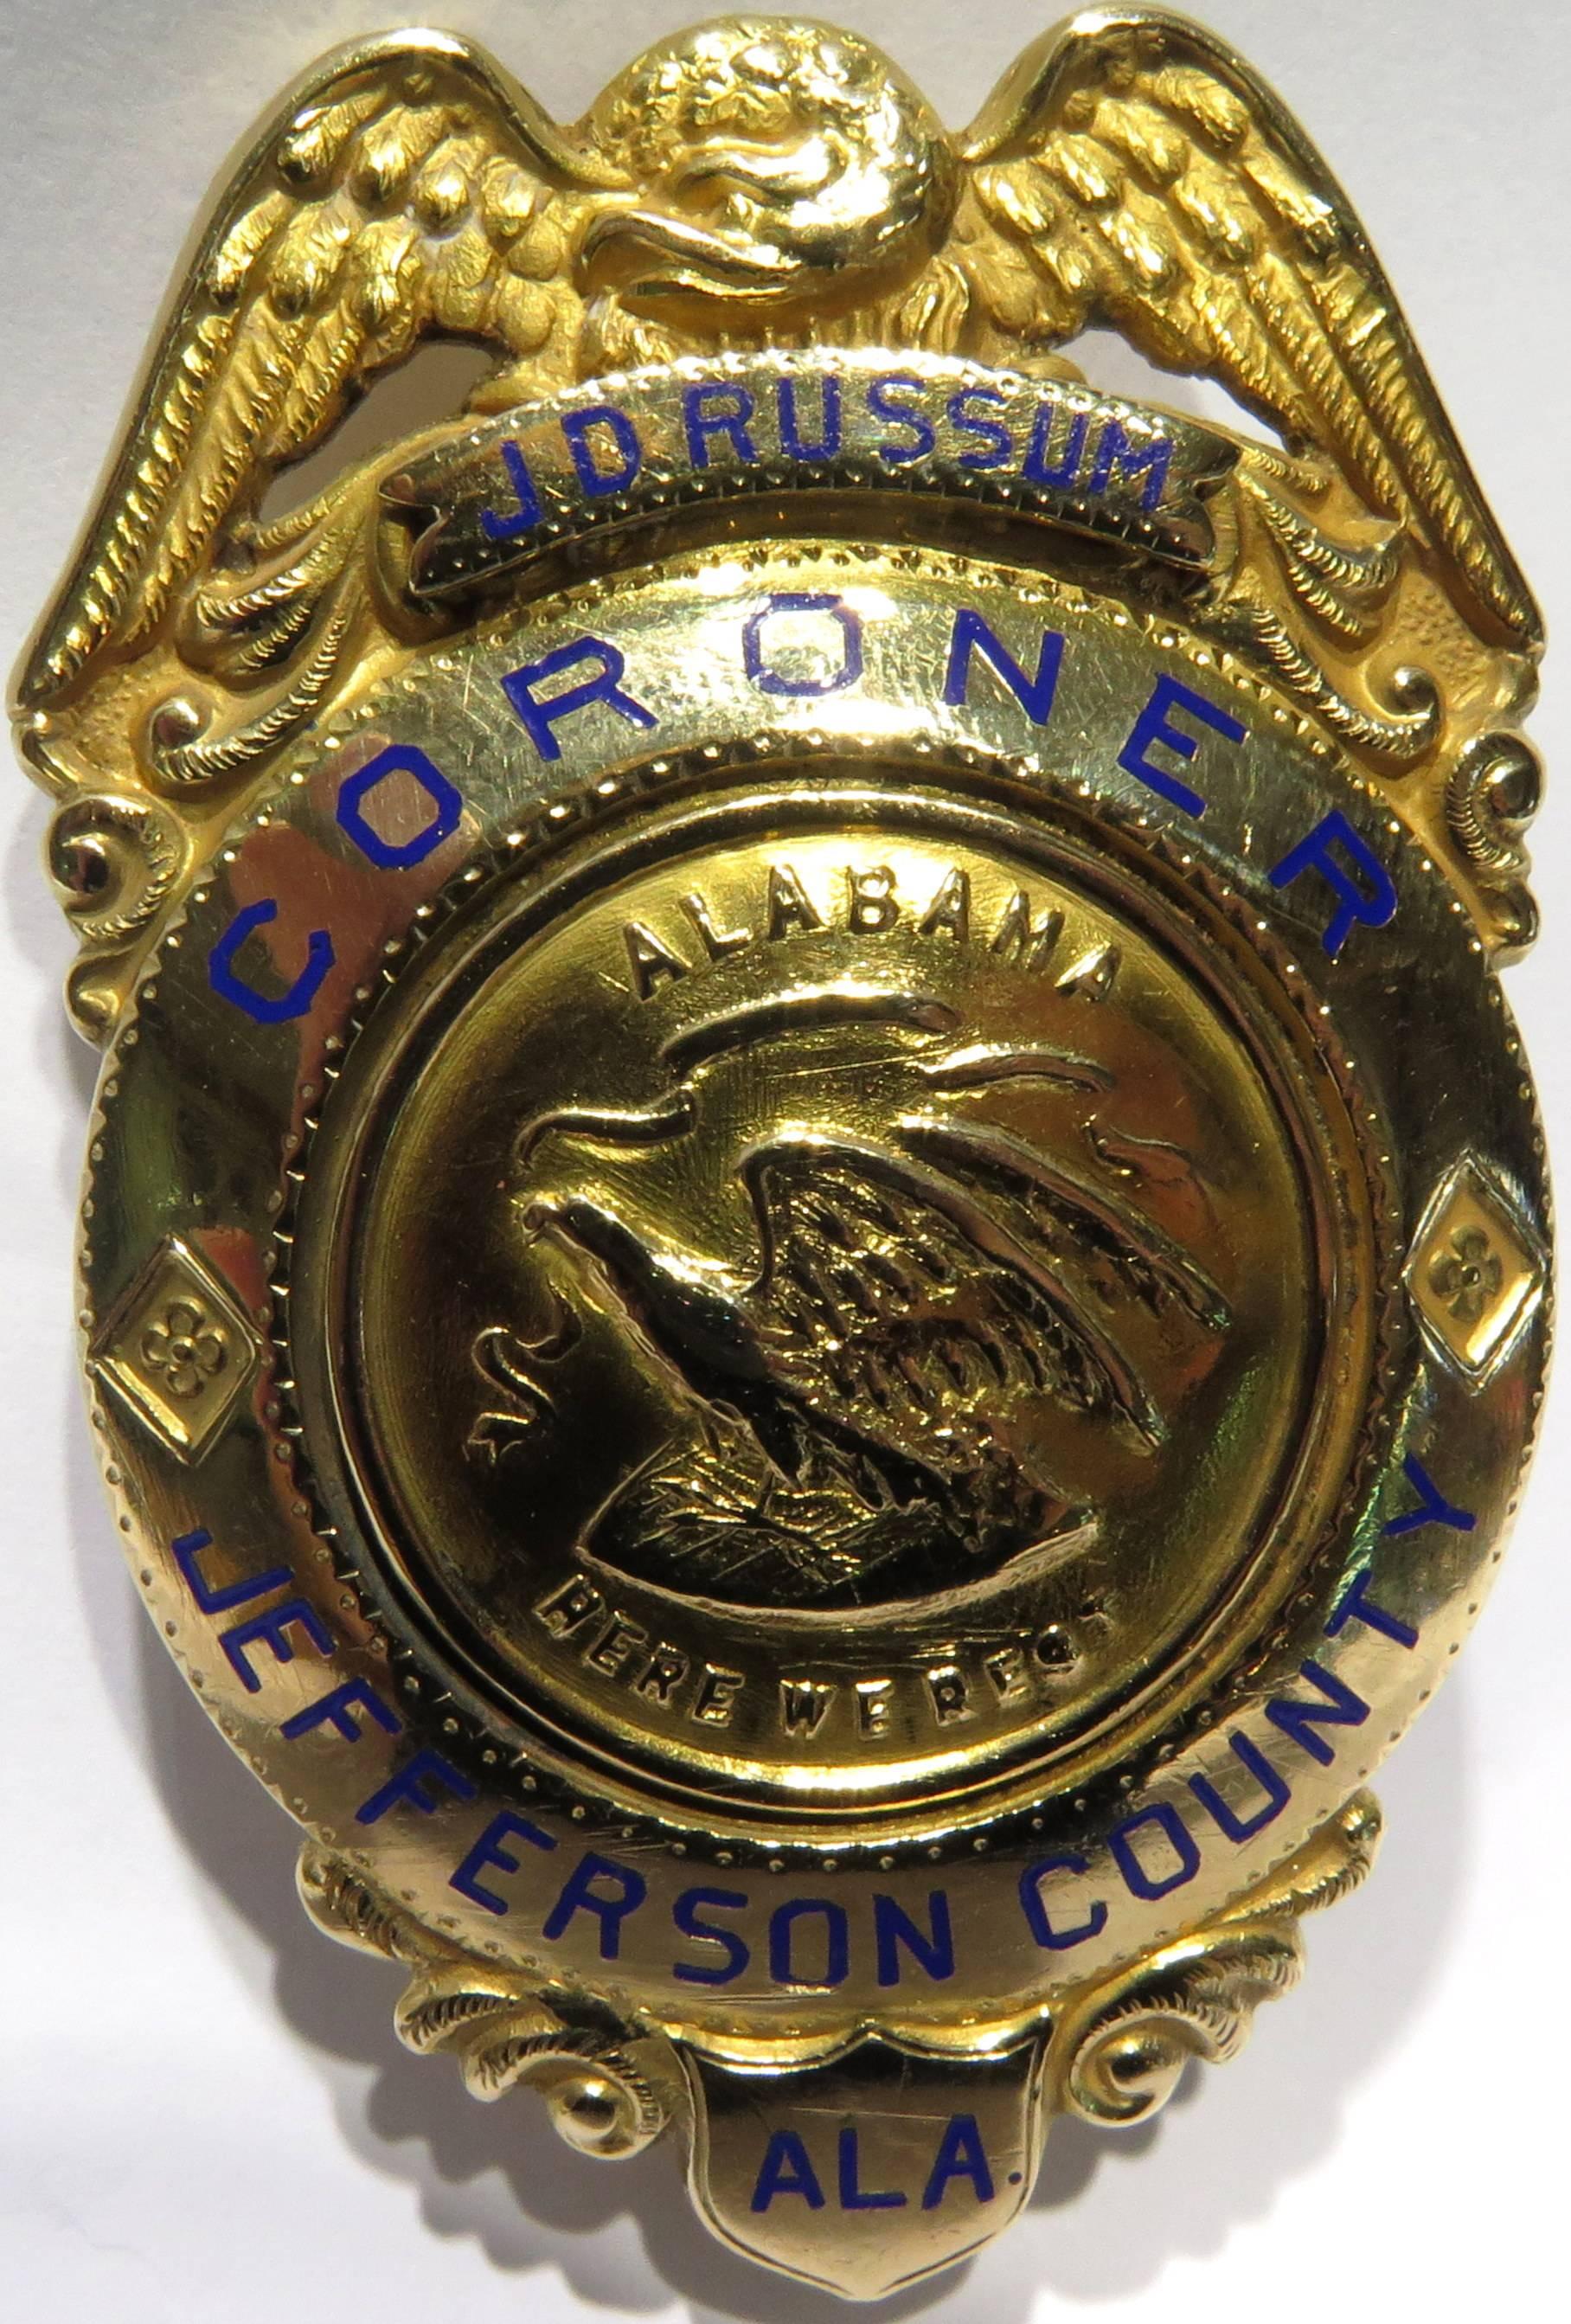 coroner badge